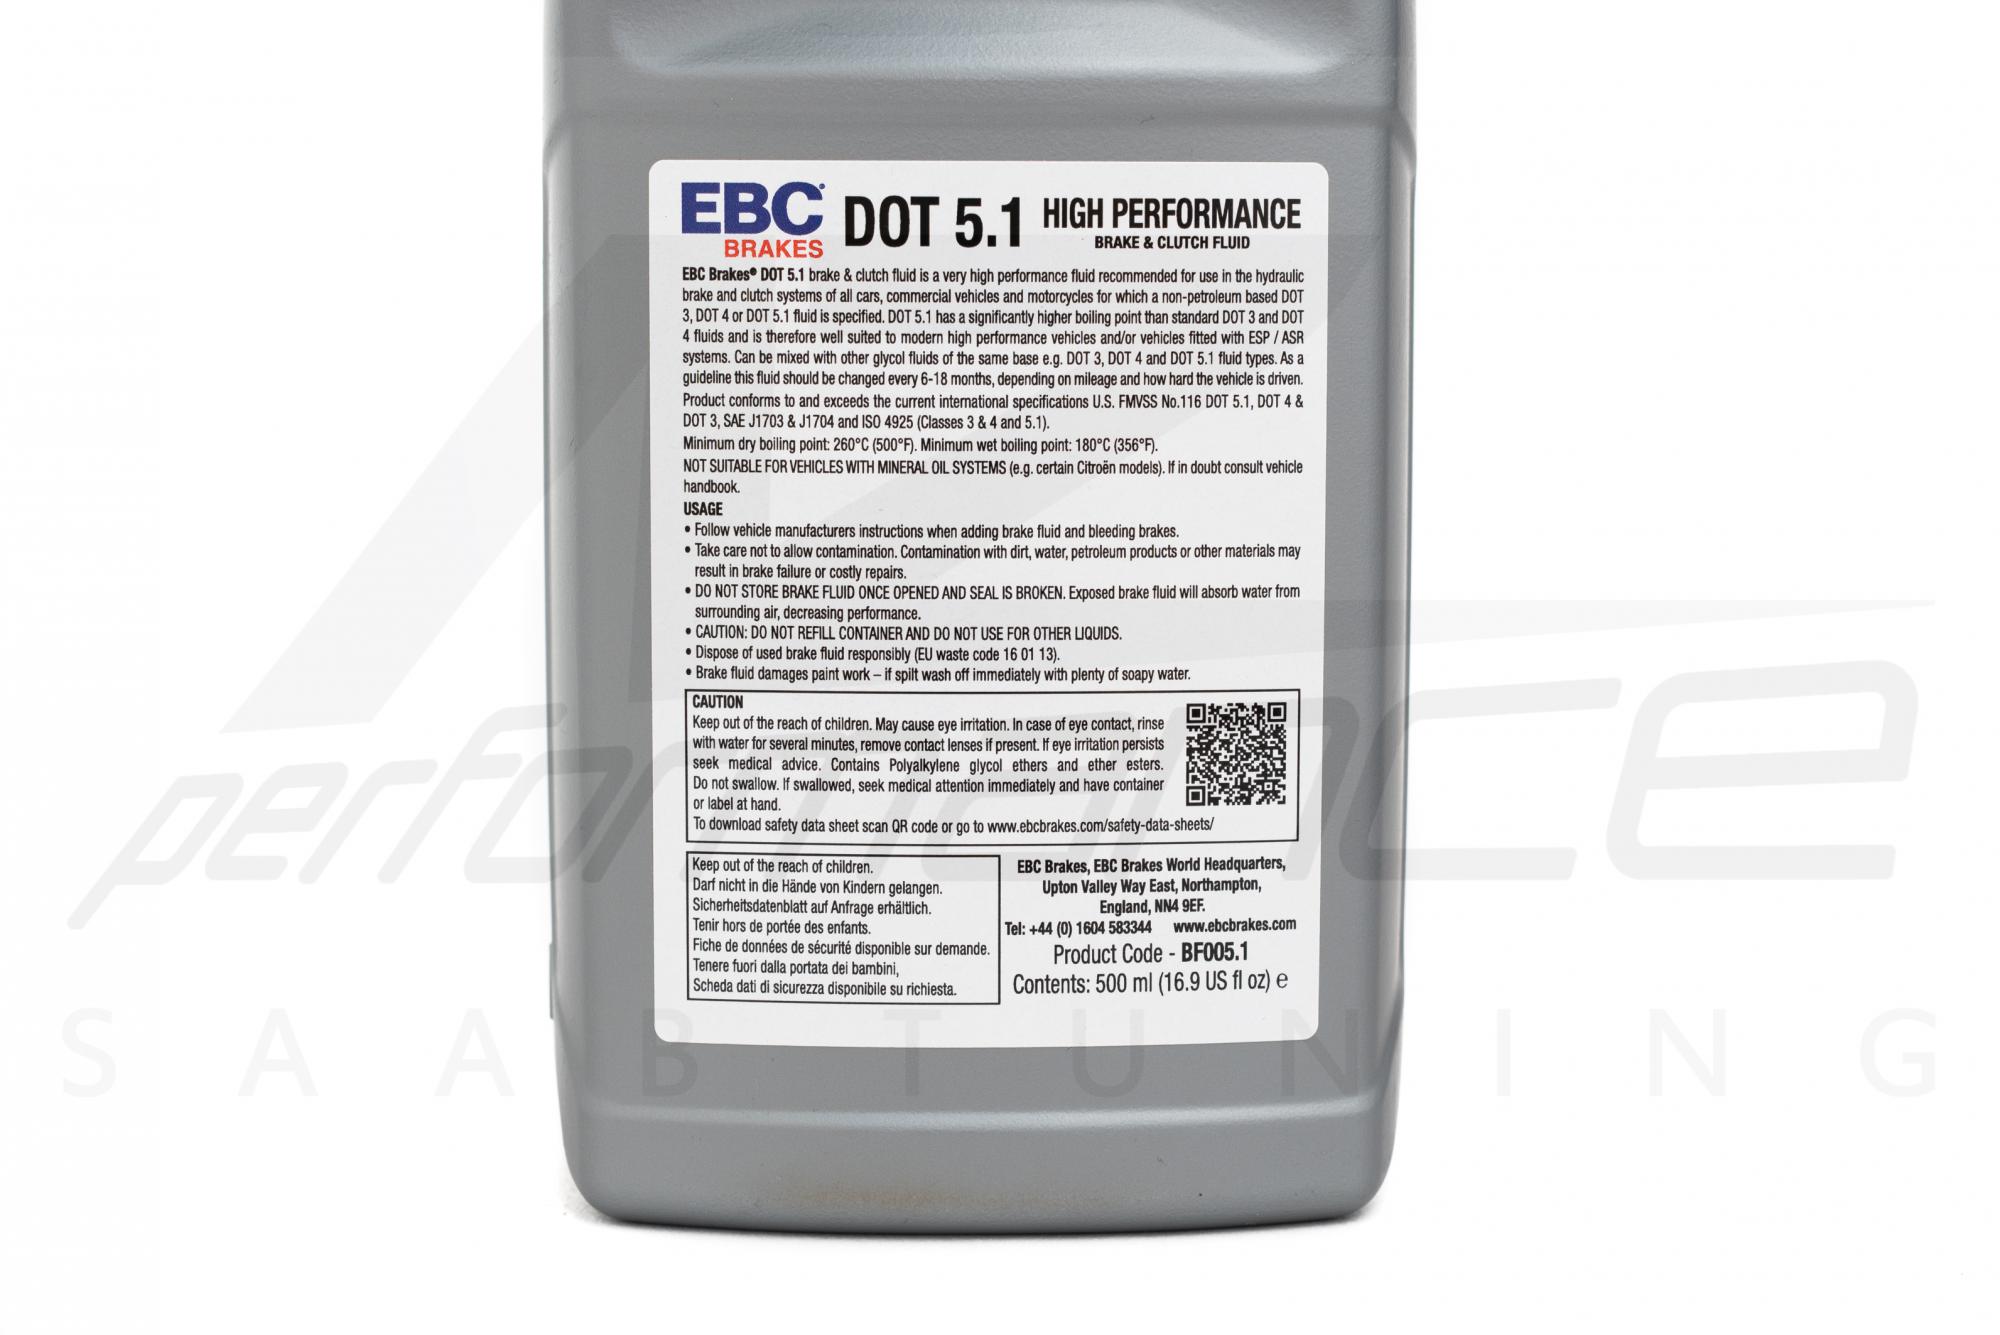 EBC BF005.1 Brake Fluid for Performance and Street Cars (DOT5.1) 500 ml